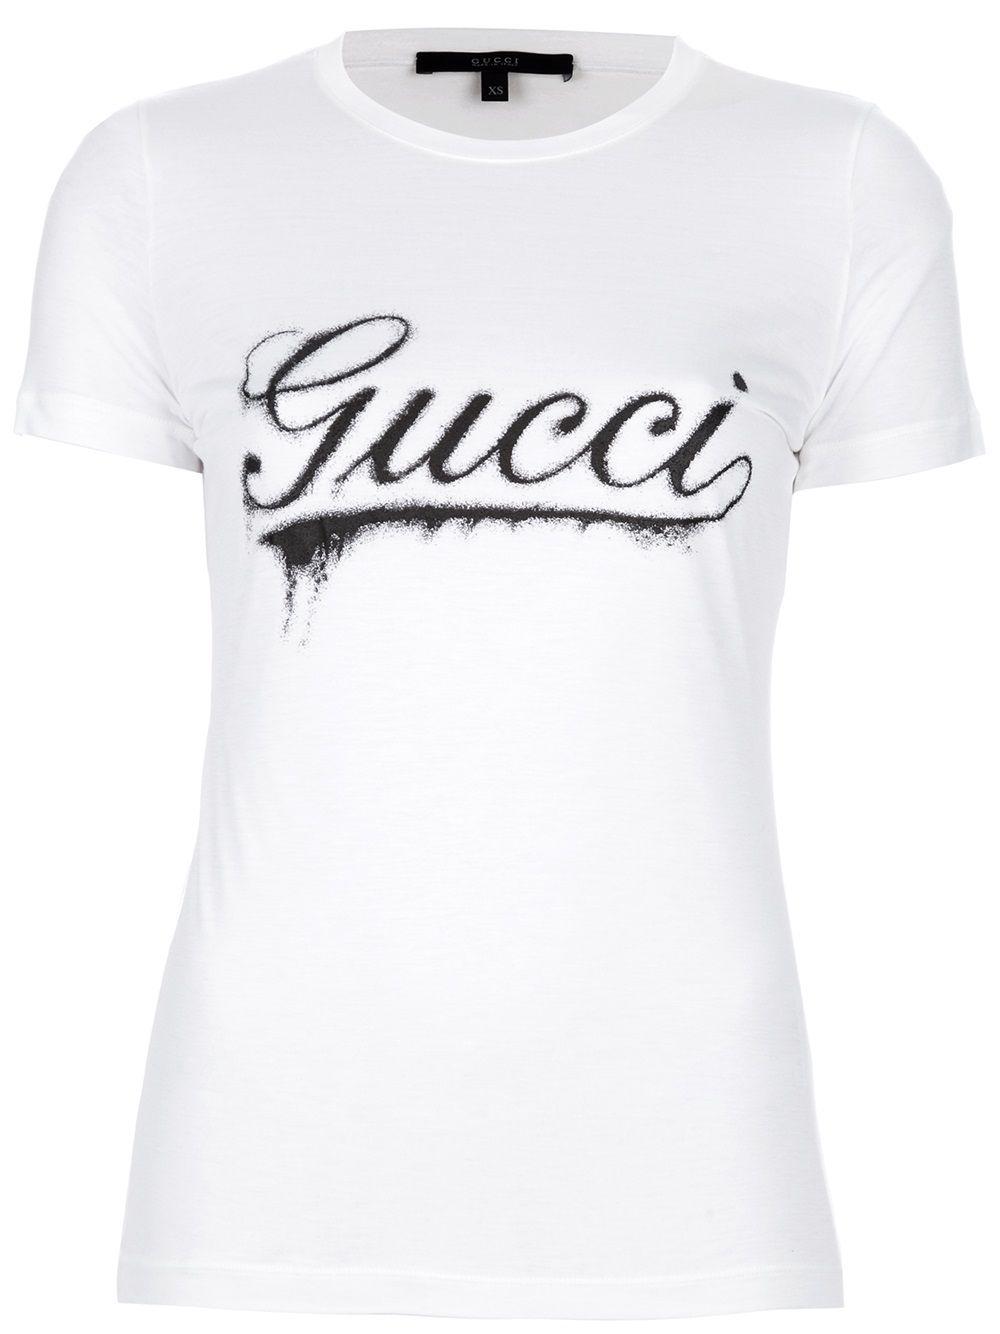 Gucci Clothing Logo - Gucci Logo Print Tshirt in Black